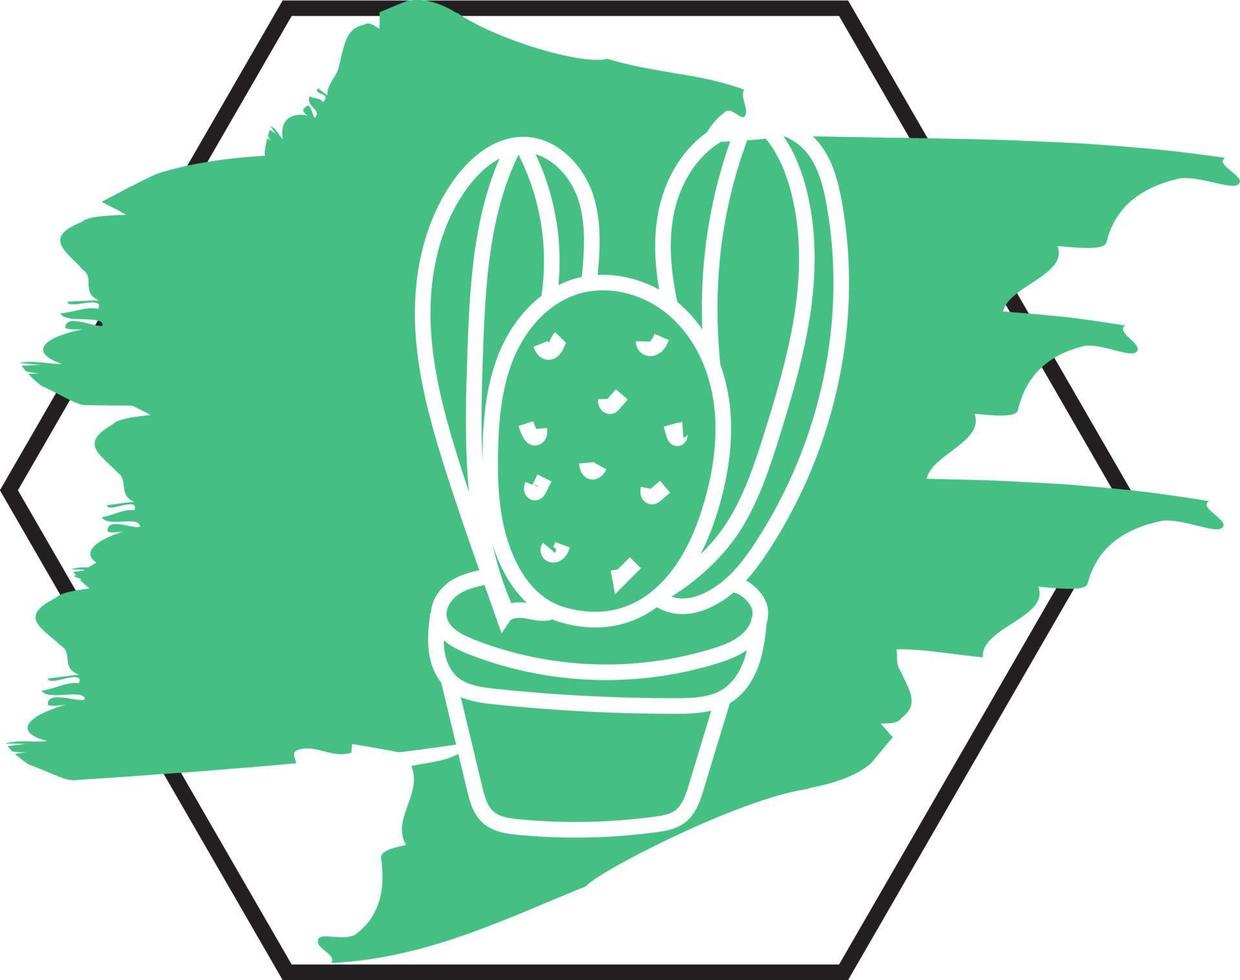 San Pedro cactus, icon illustration, vector on white background